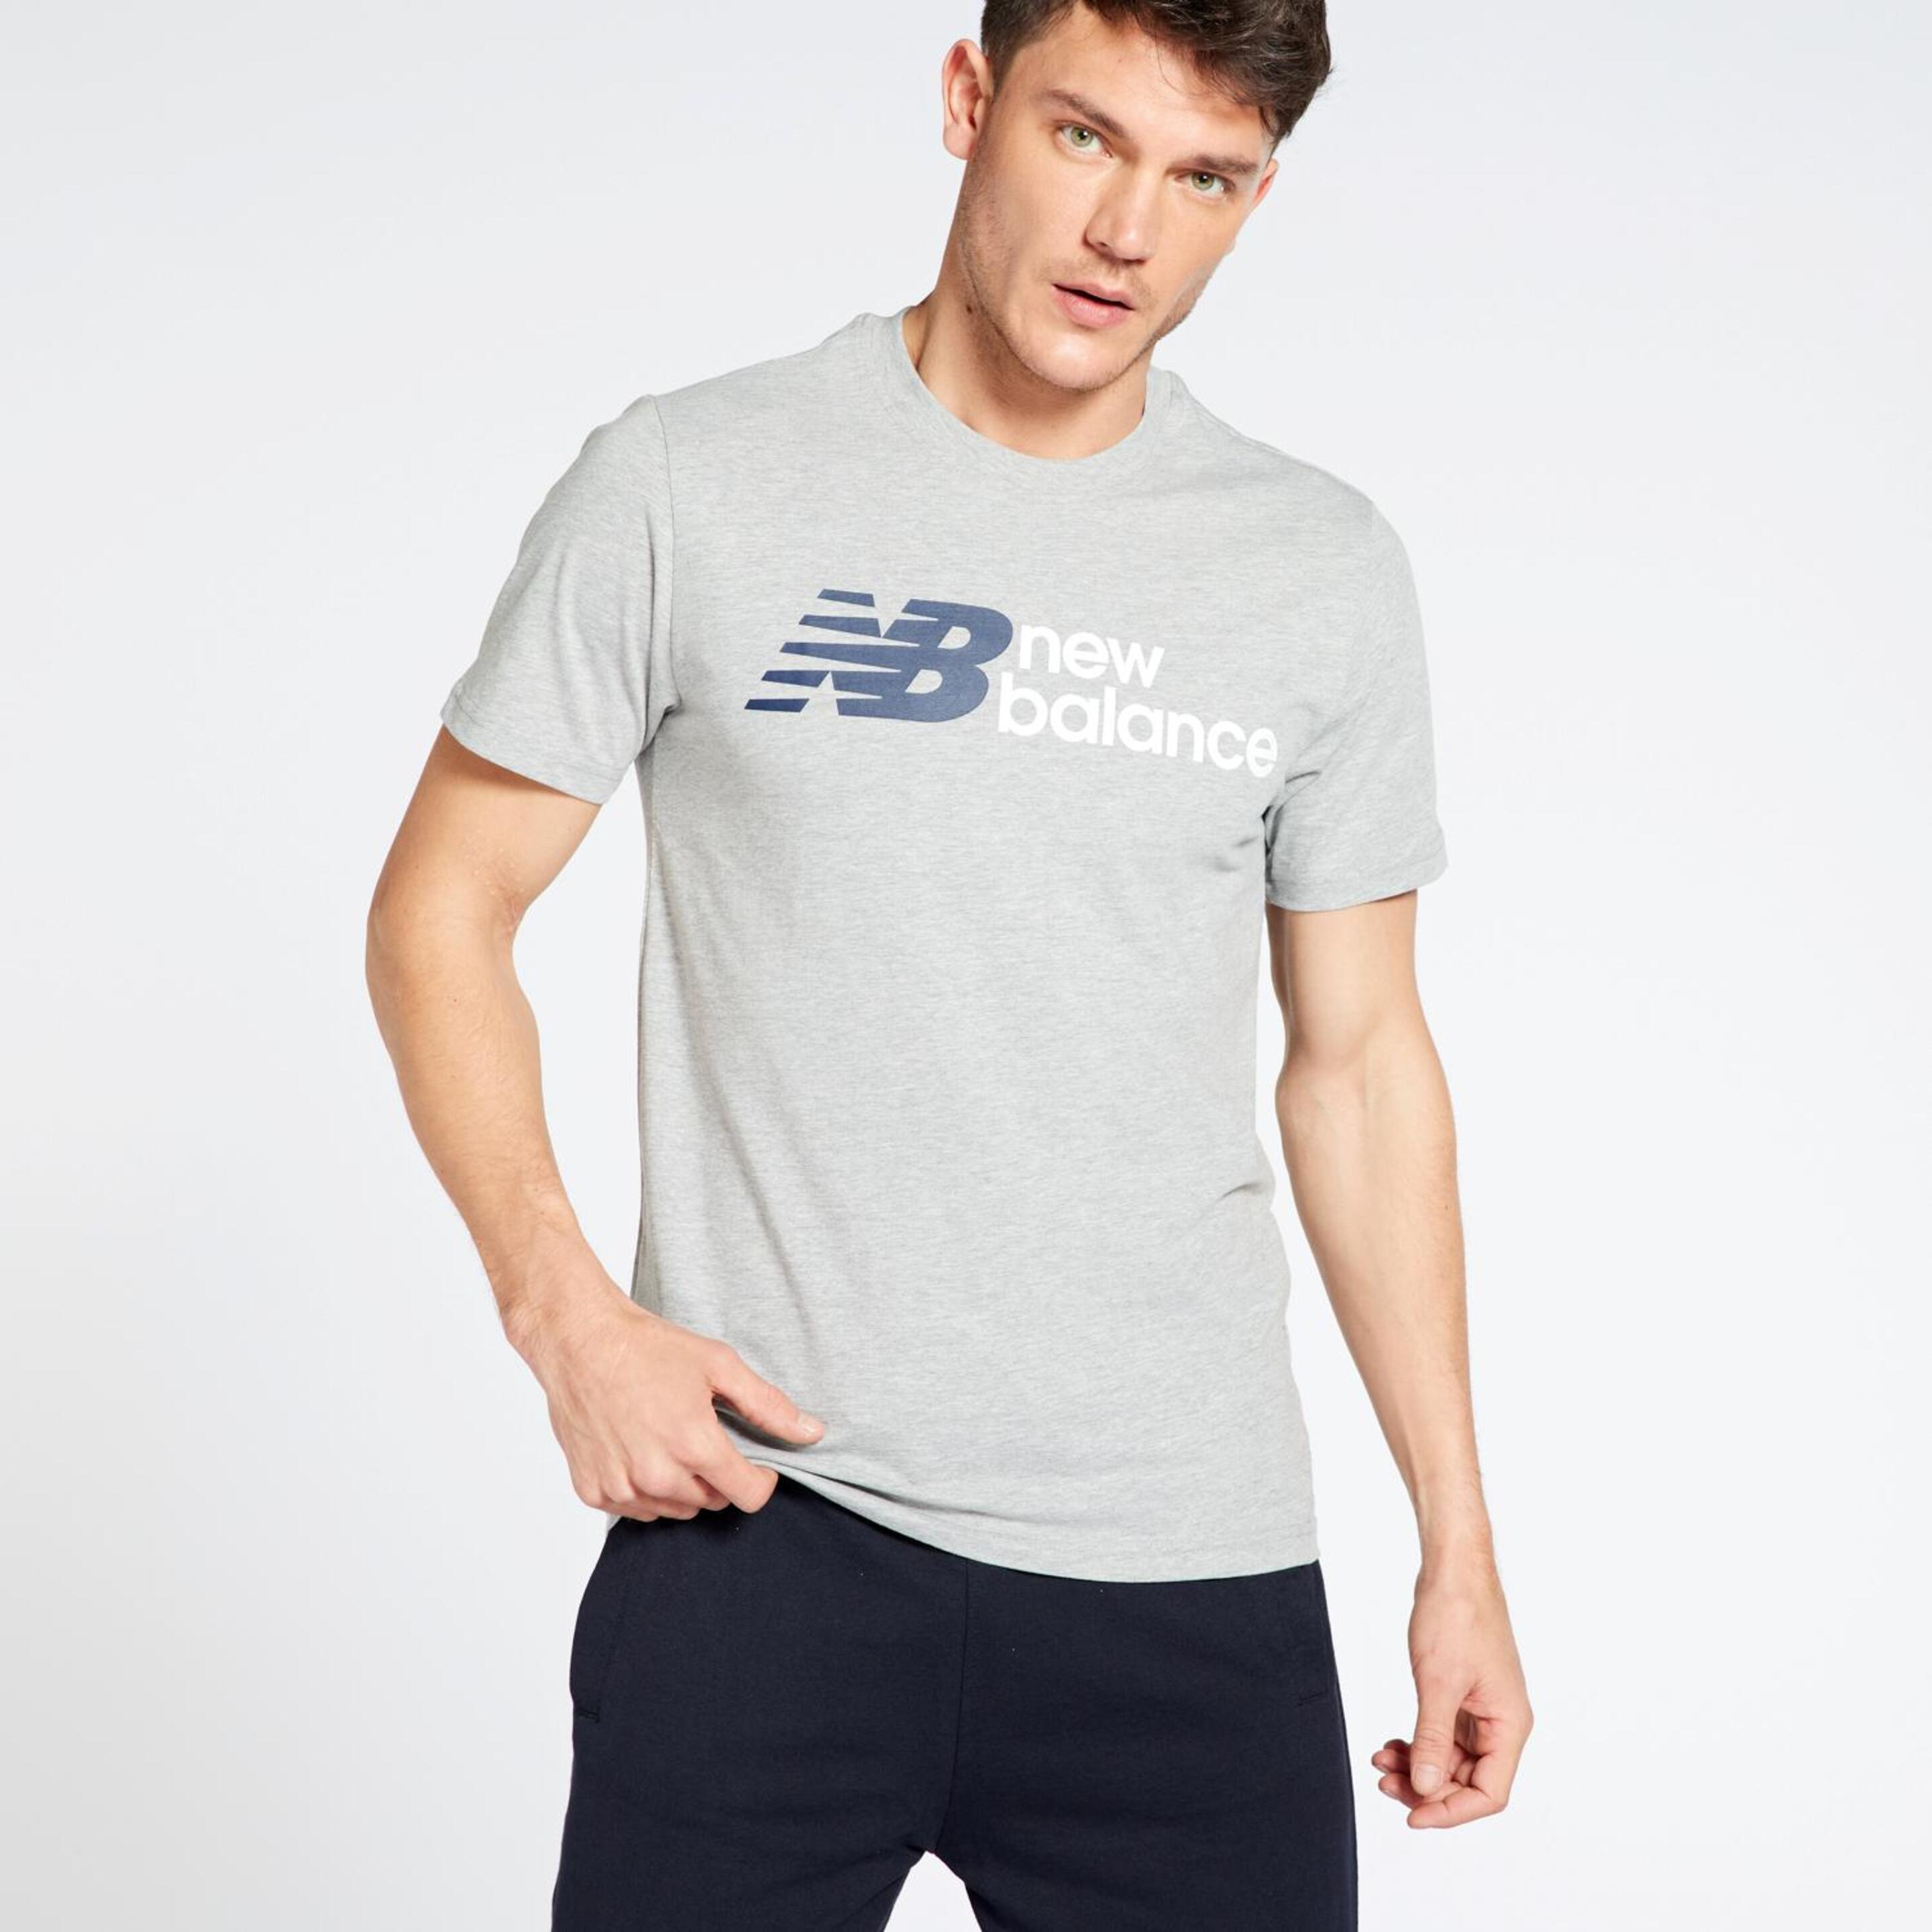 New Balance Old School - gris - Camiseta Hombre